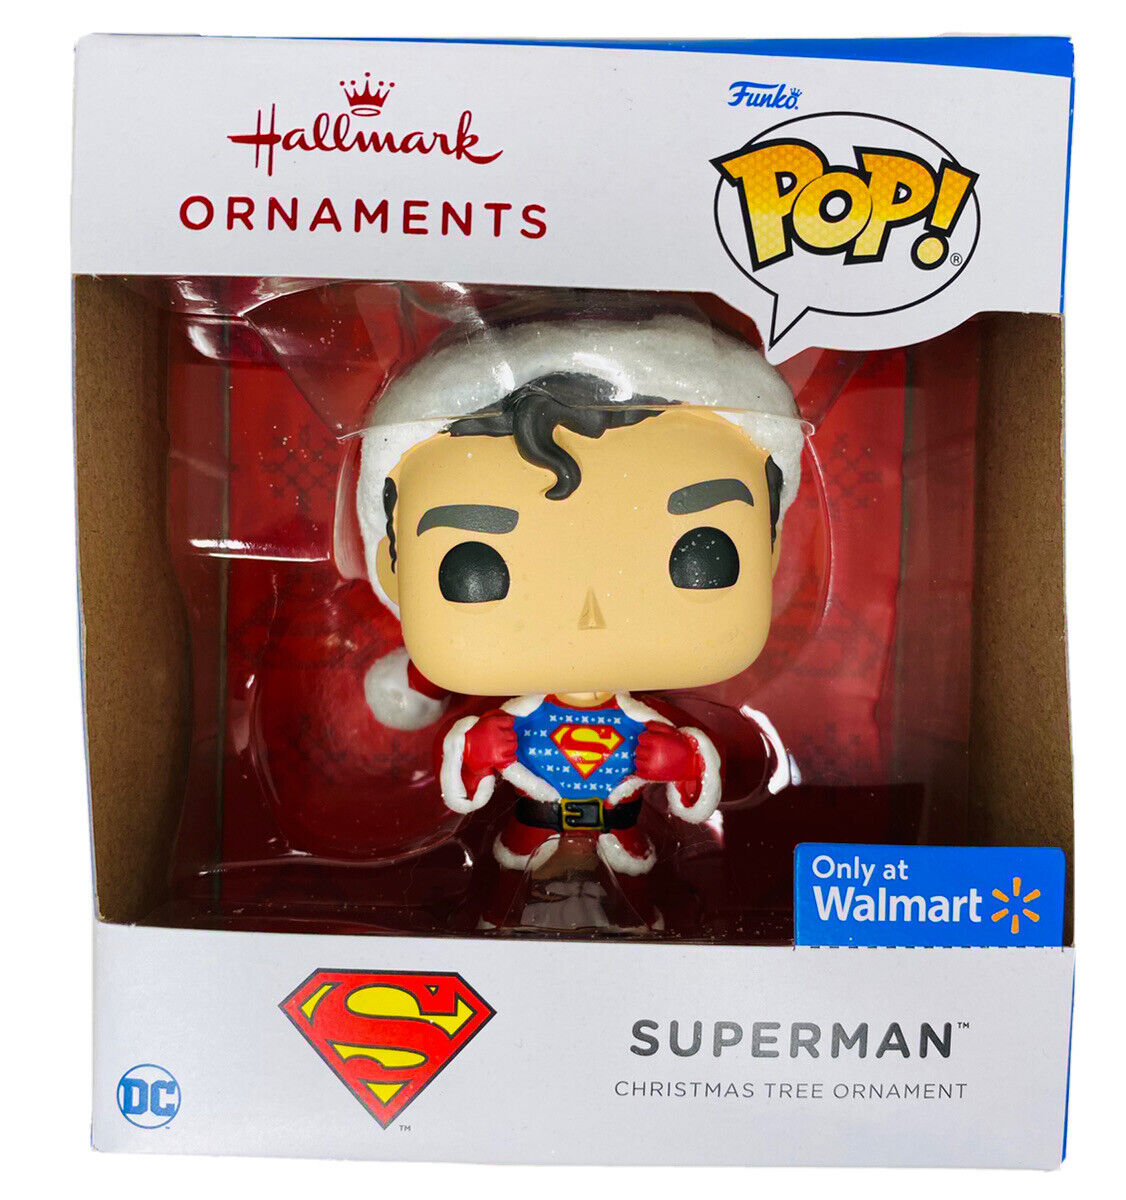 Funko Pop Hallmark Ornaments Superman DC Walmart Exclusive Christmas 2021